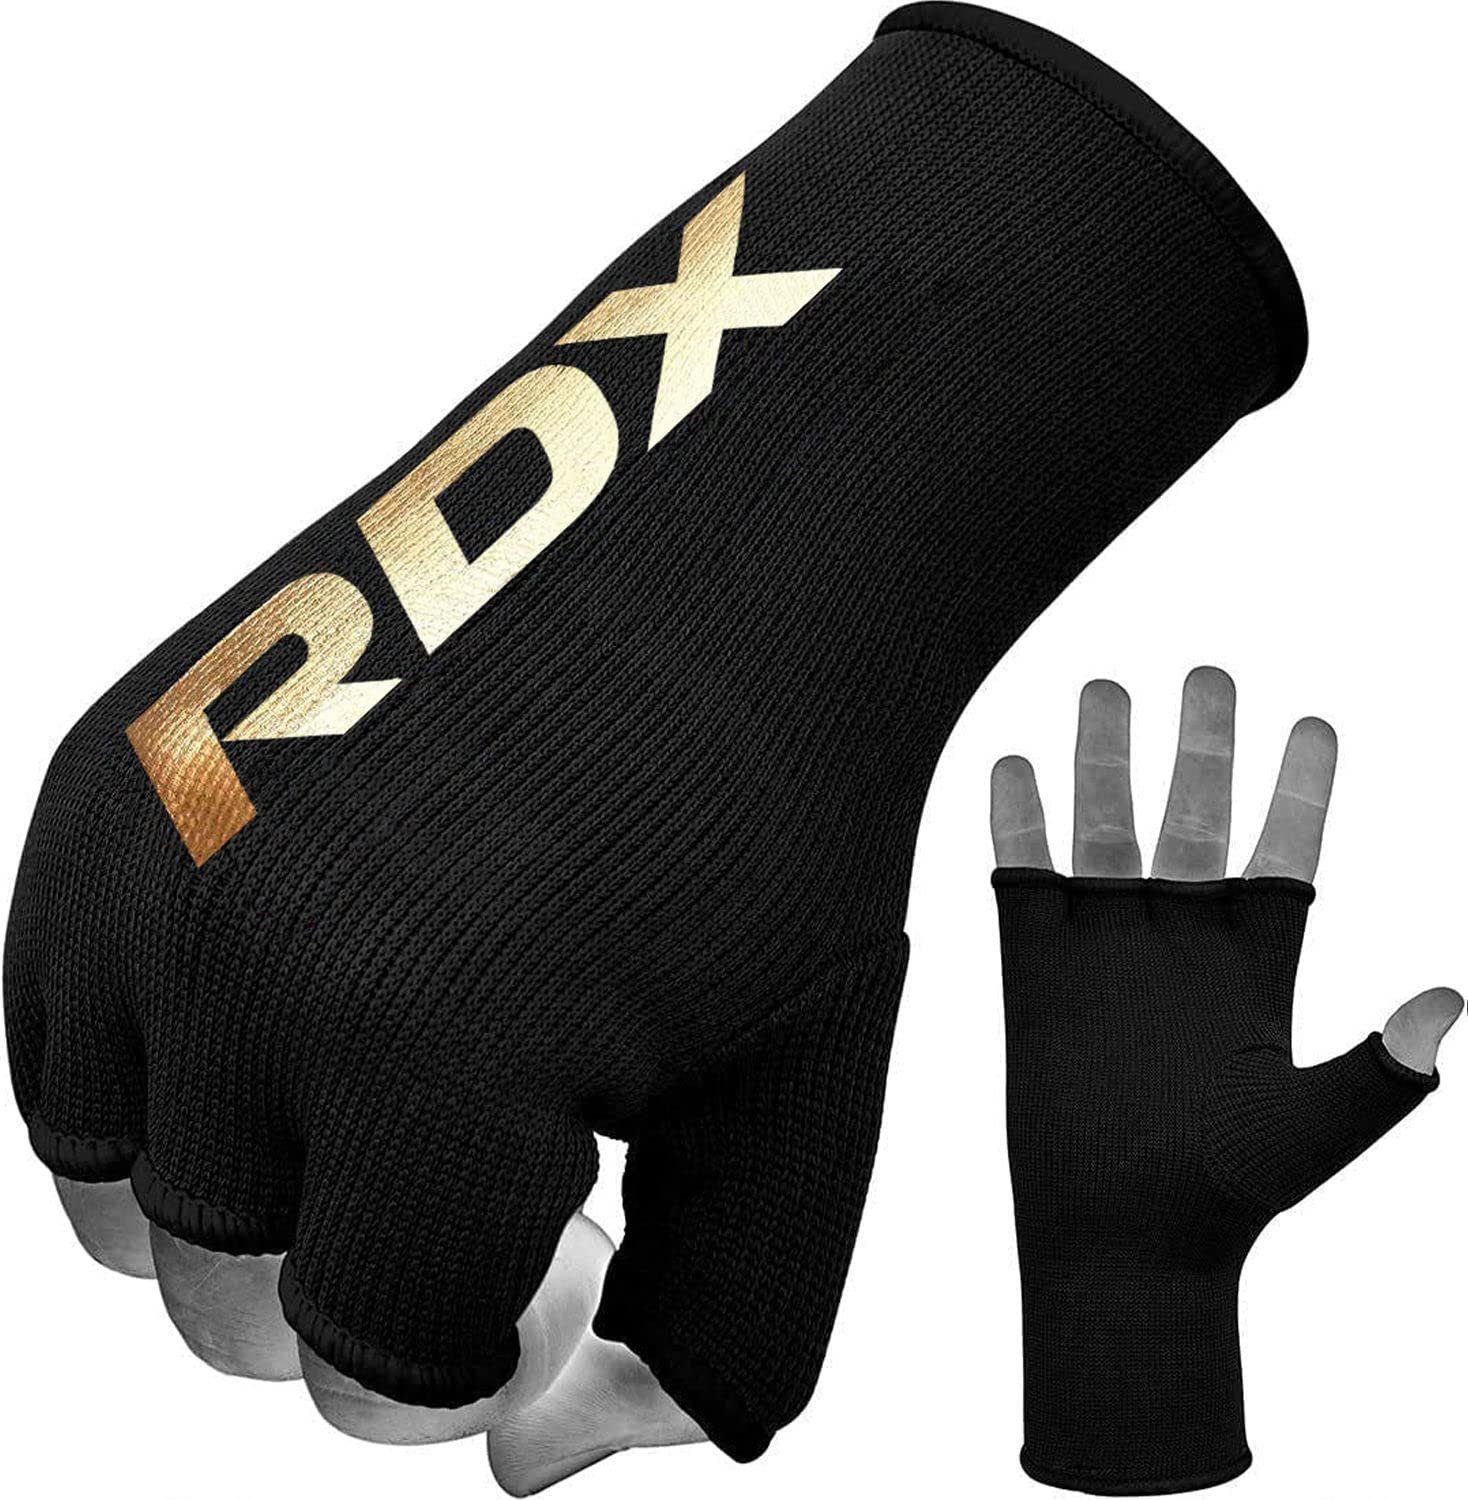 RDX RDX BLACK Boxbandagen Sparring Wraps Hand Innere Boxen Sports Boxbandagen Handschuhe Training,